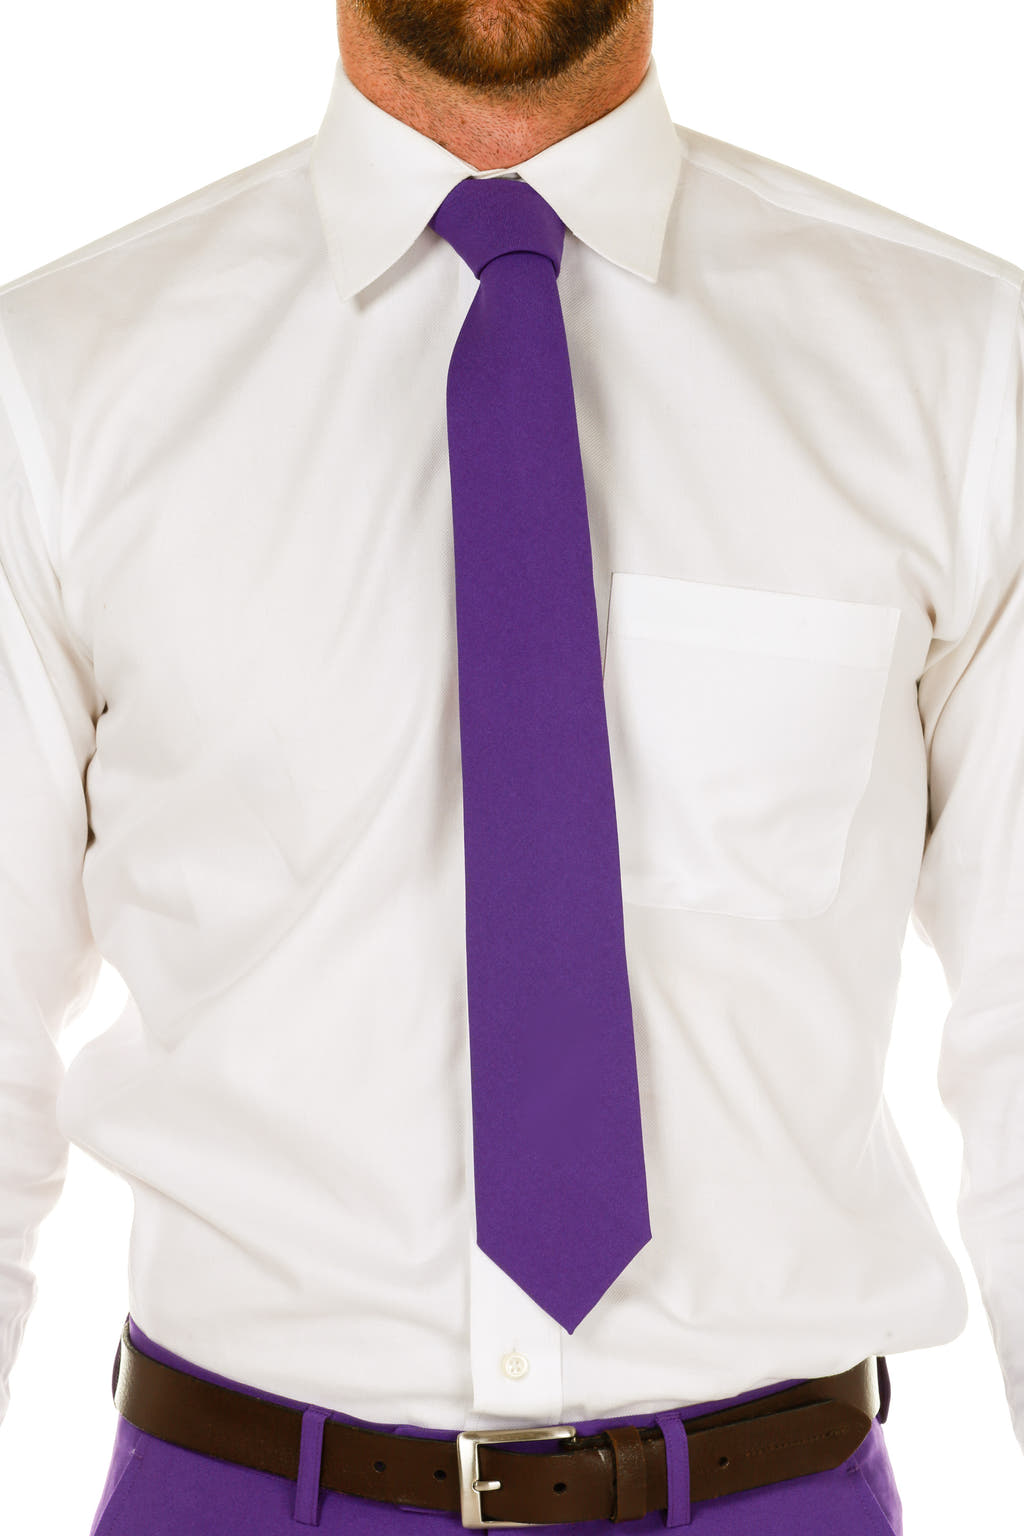 plain purple tie